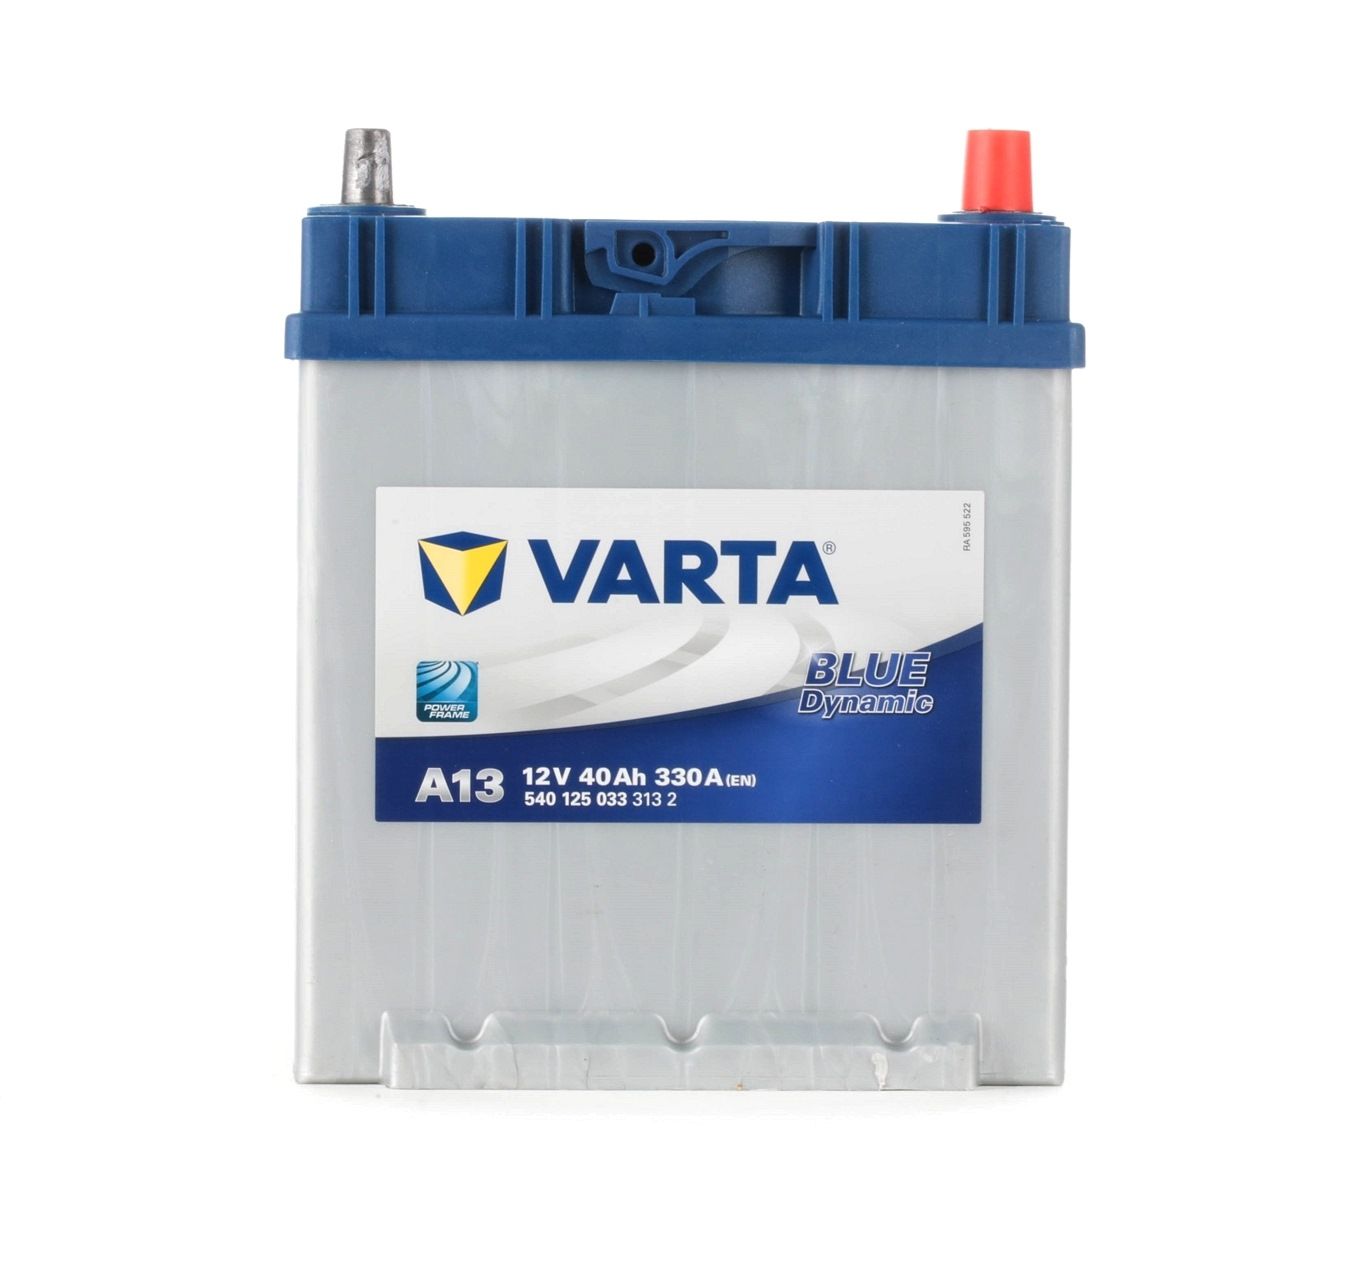 VARTA BLUE dynamic 5401250333132 Batterie 12V 40Ah 330A B01 Bleiakkumulator